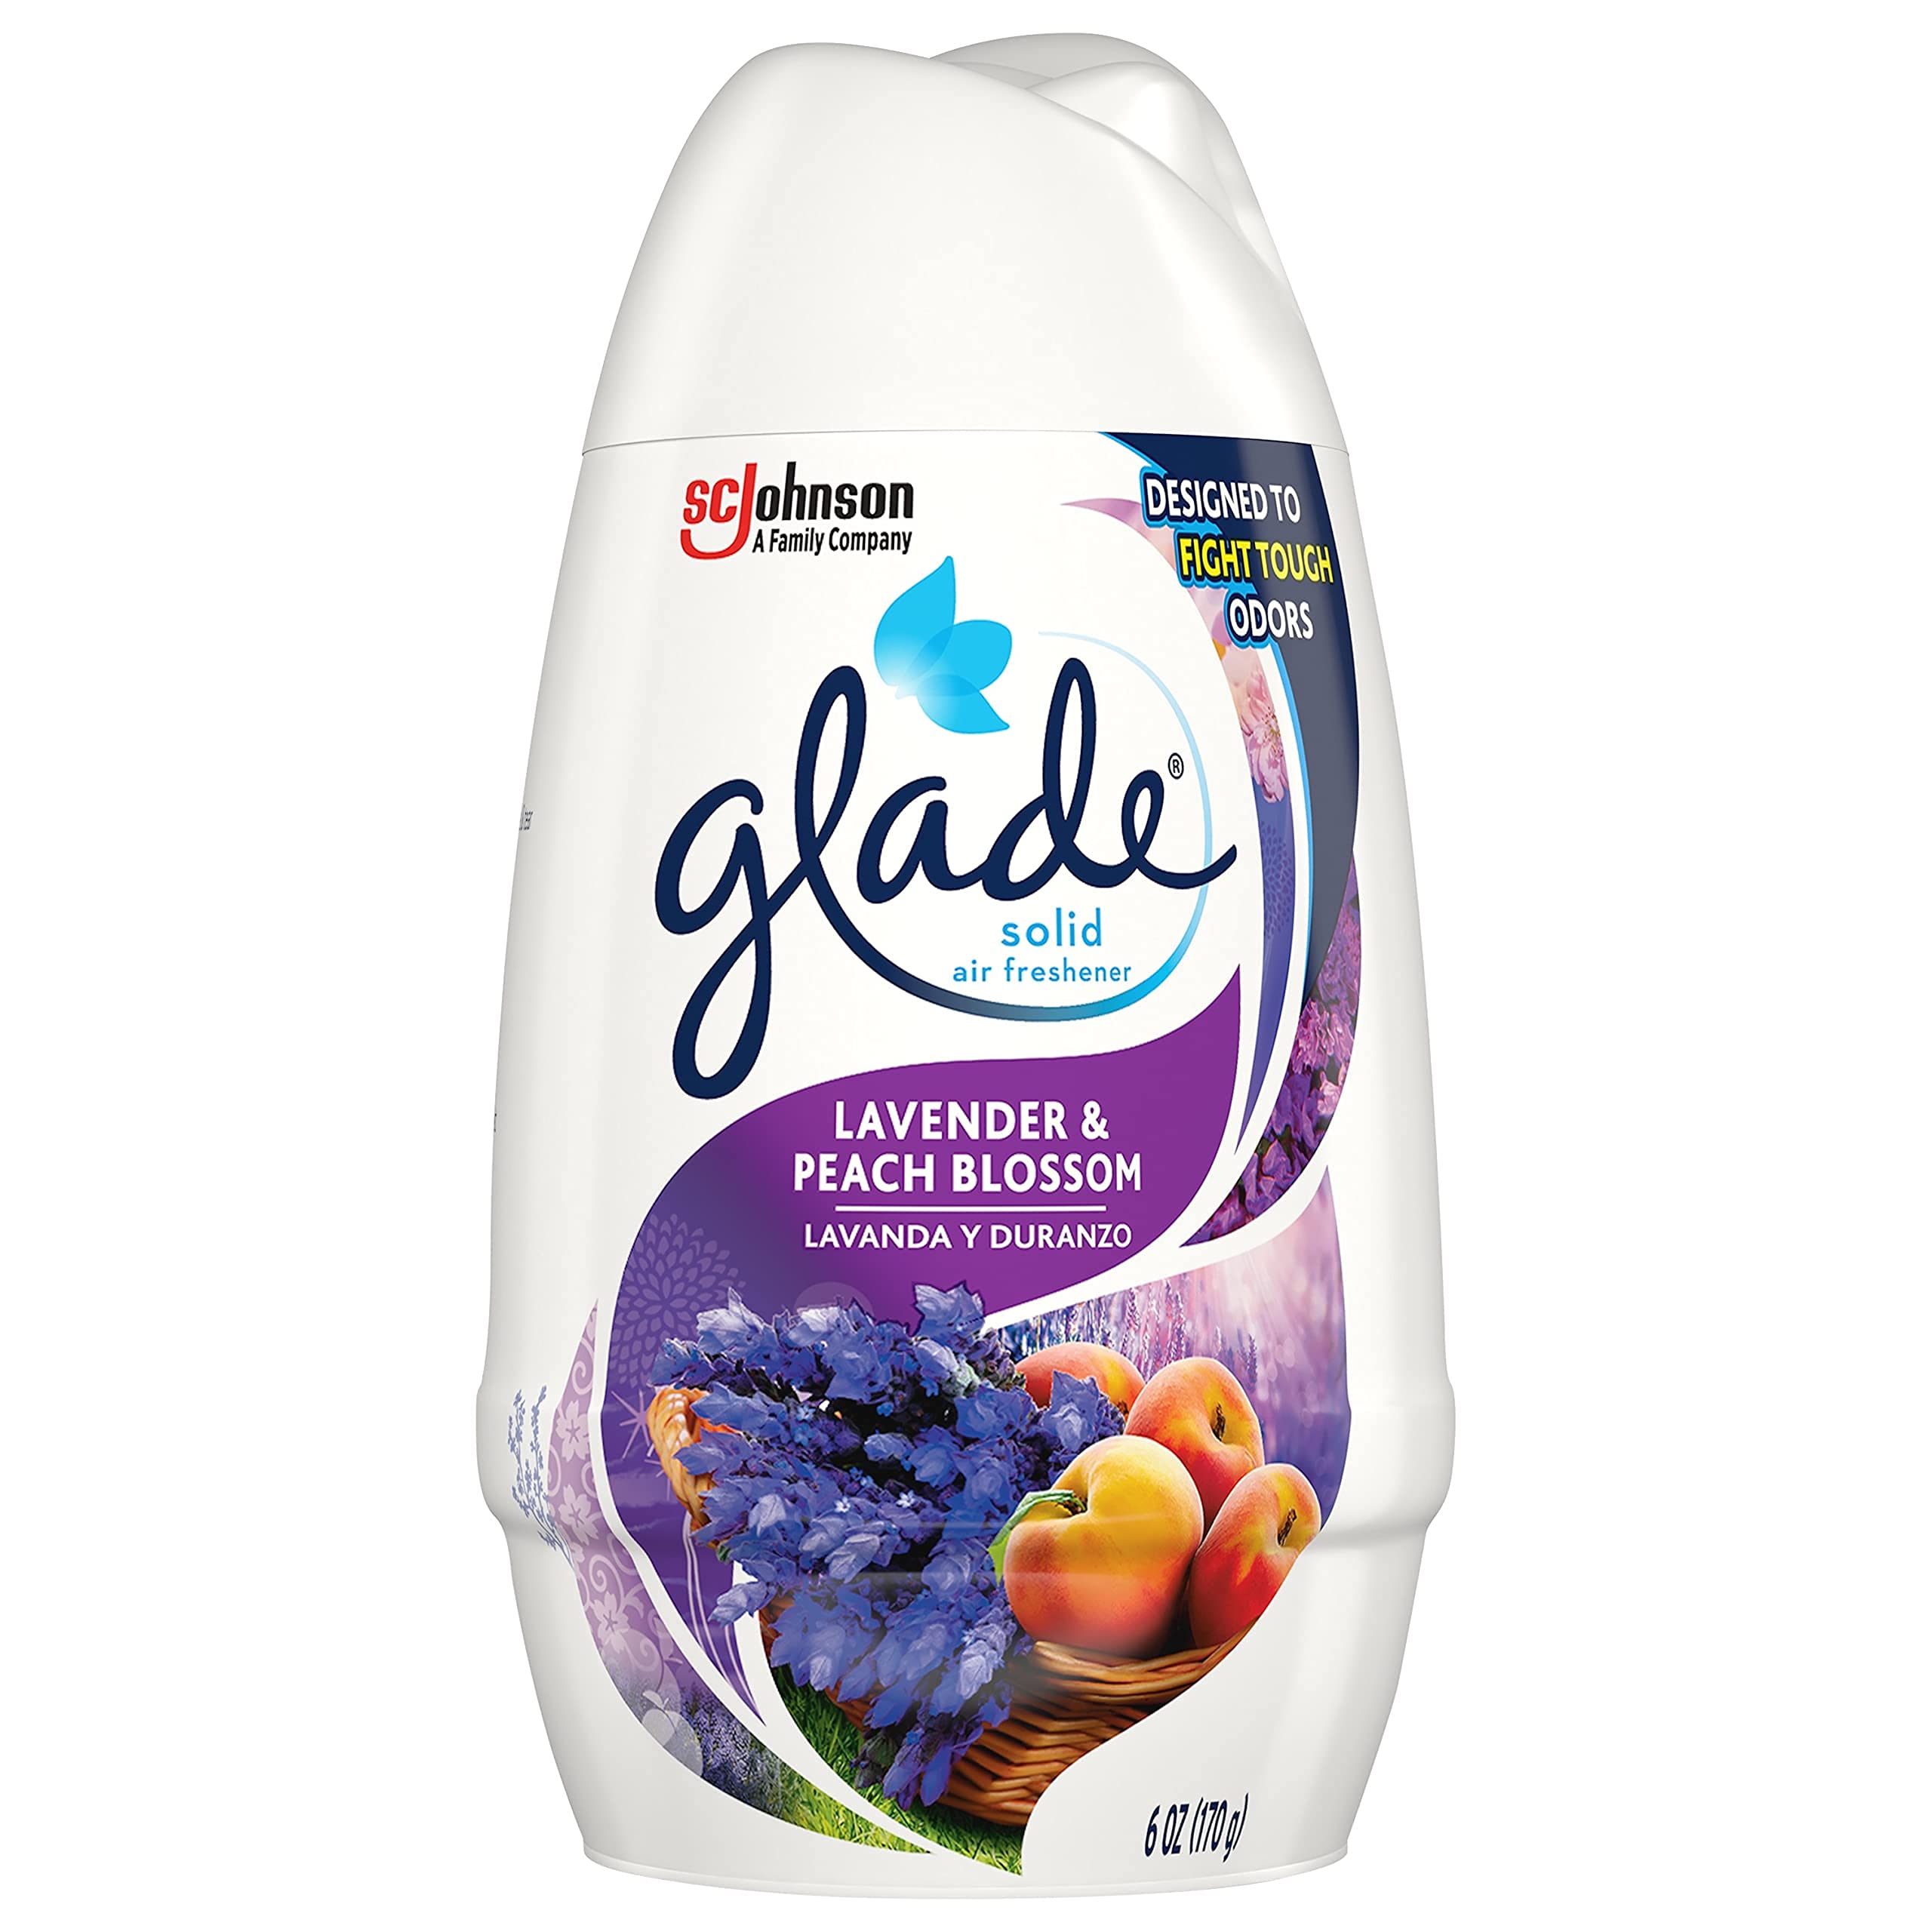 Glade Solid Air Freshener, Deodorizer for Home and Bathroom, Lavender & Peach Blossom, 6 Oz